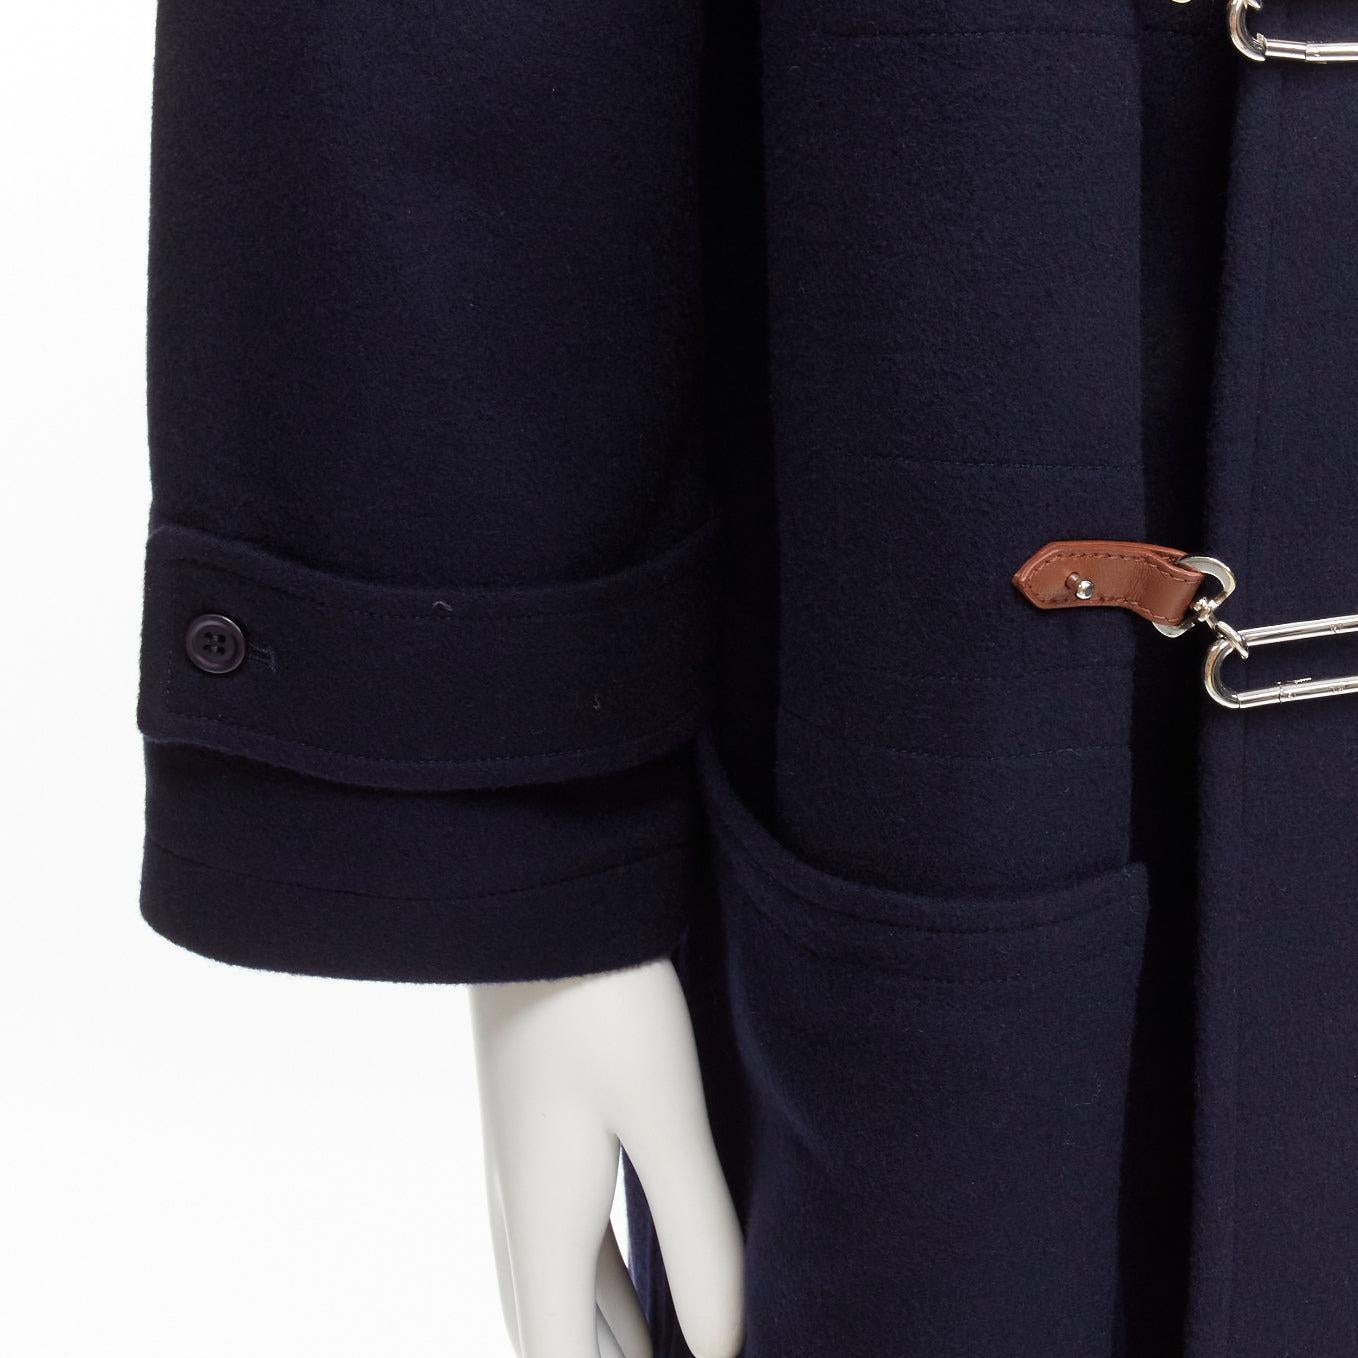 RALPH LAUREN Label Fintona 100% wool navy silver toggle buckle coat Size 6 M For Sale 4